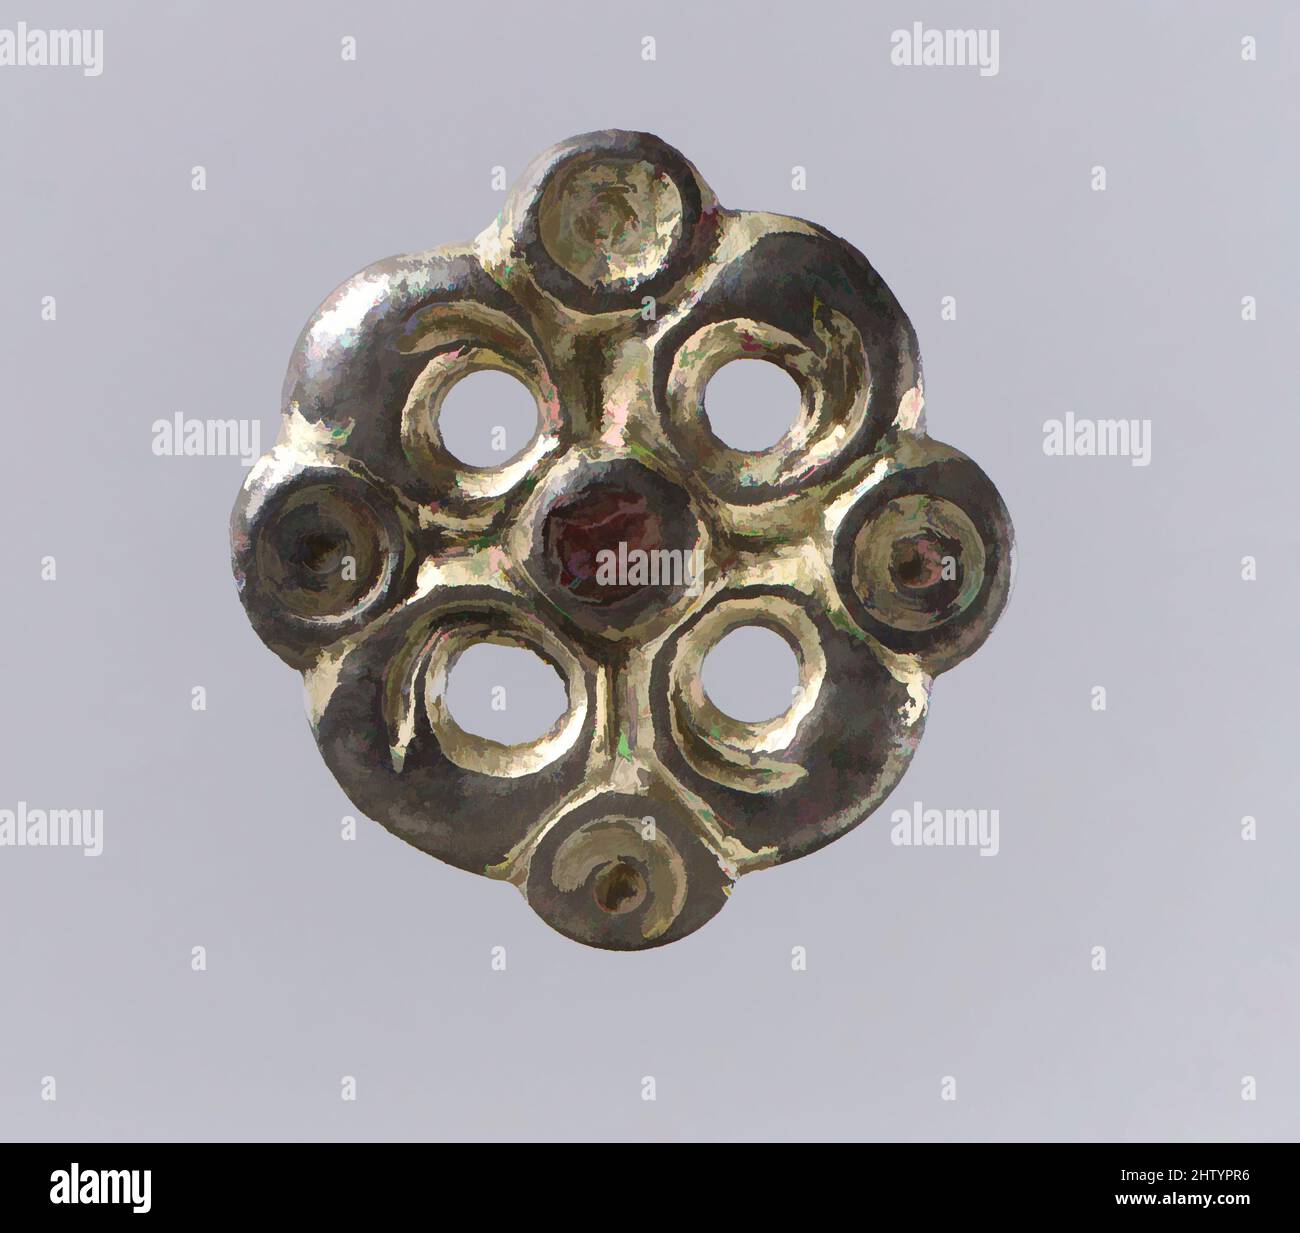 SALE Silver-Gray Medieval Filigree Peek-Through Metal Button 7/8